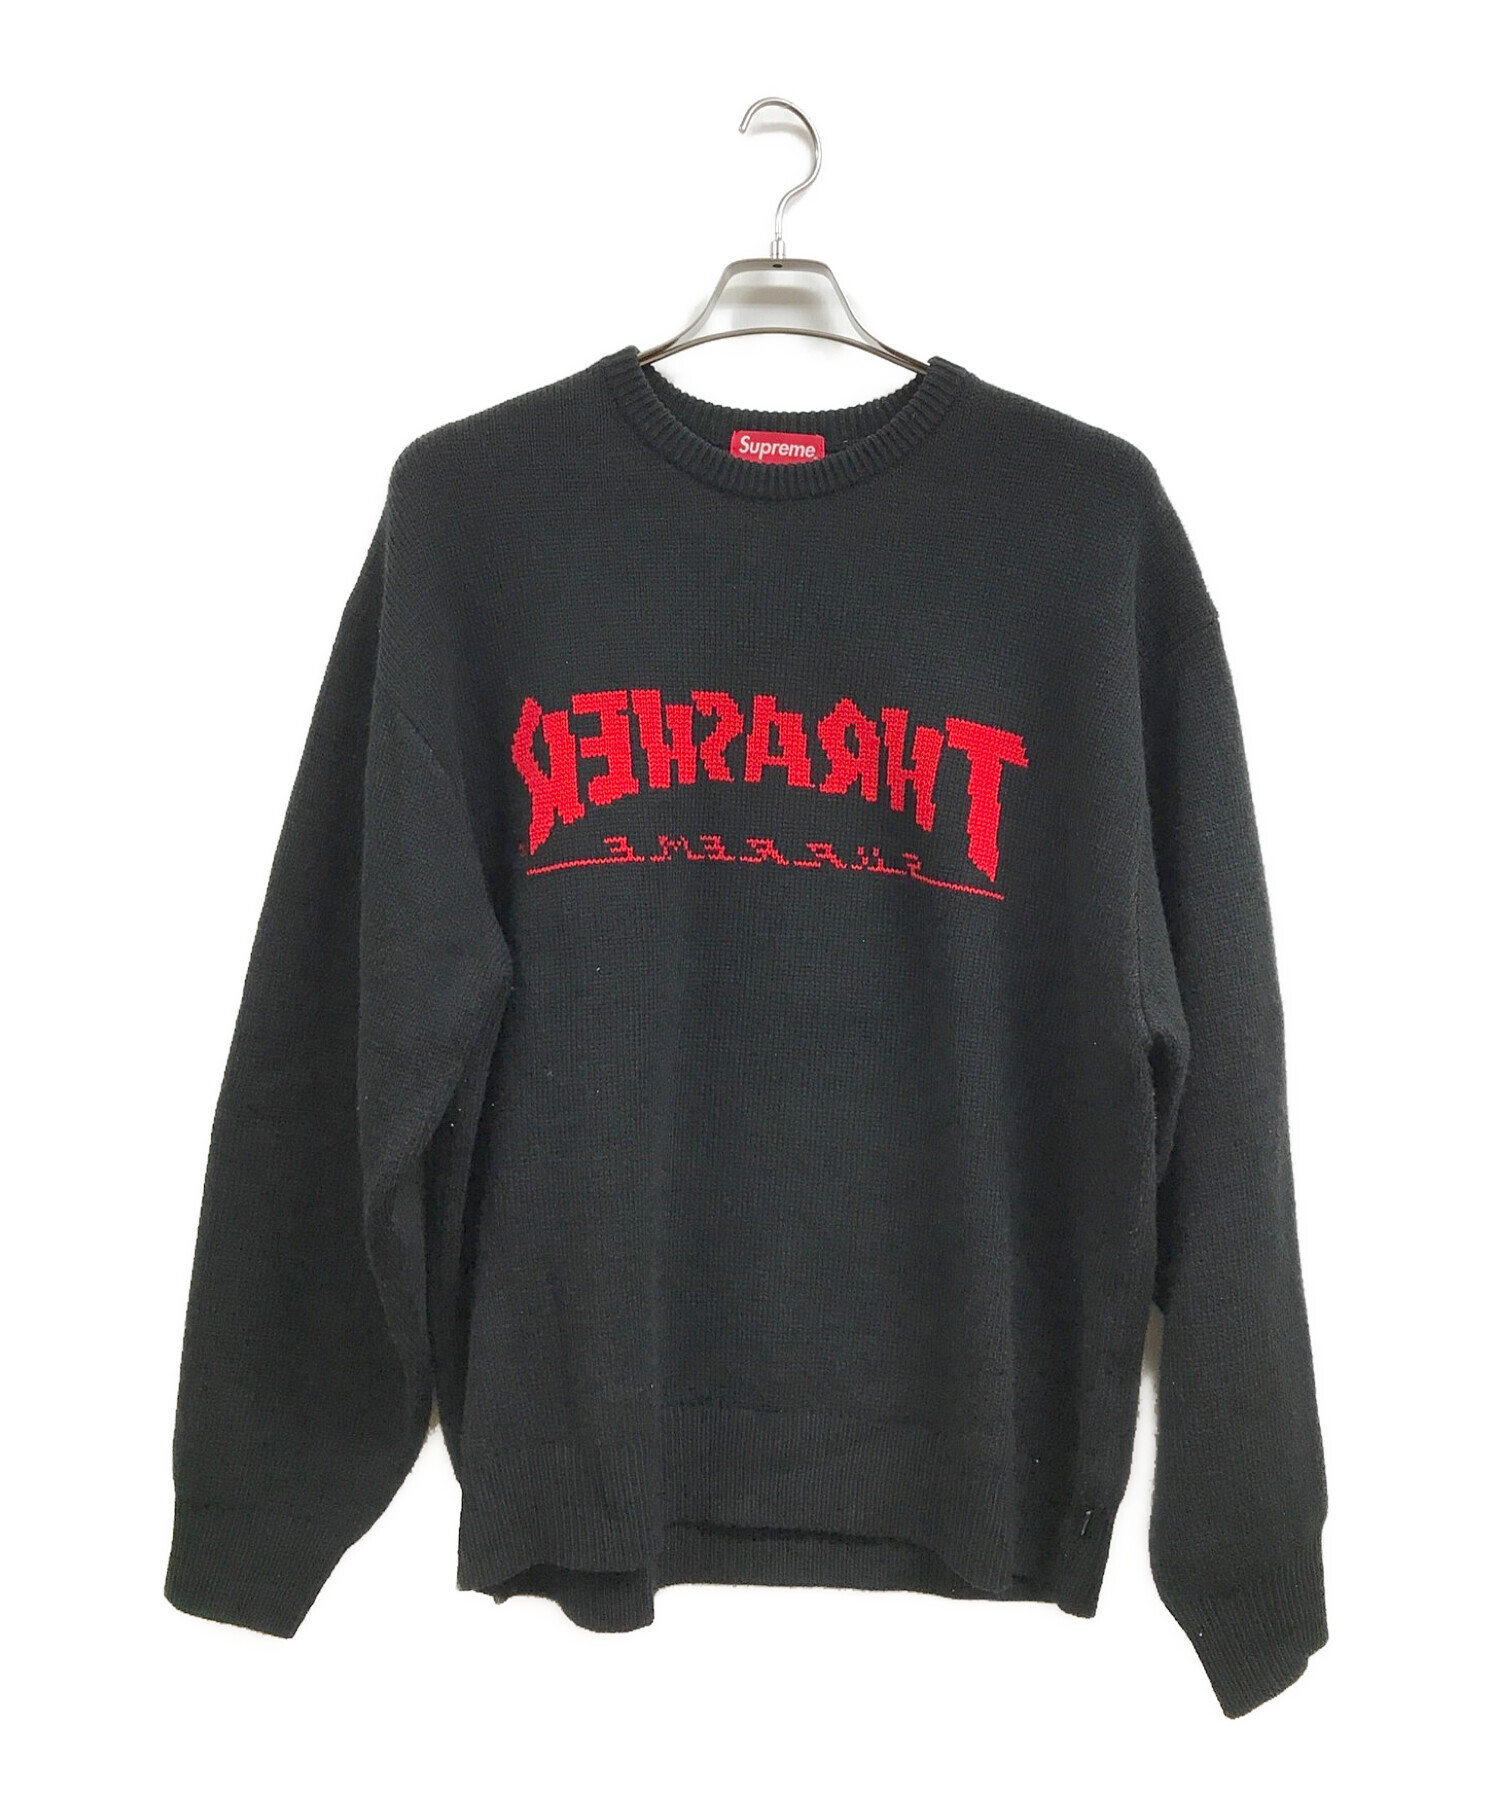 Supreme®/Thrasher® Sweater Black L